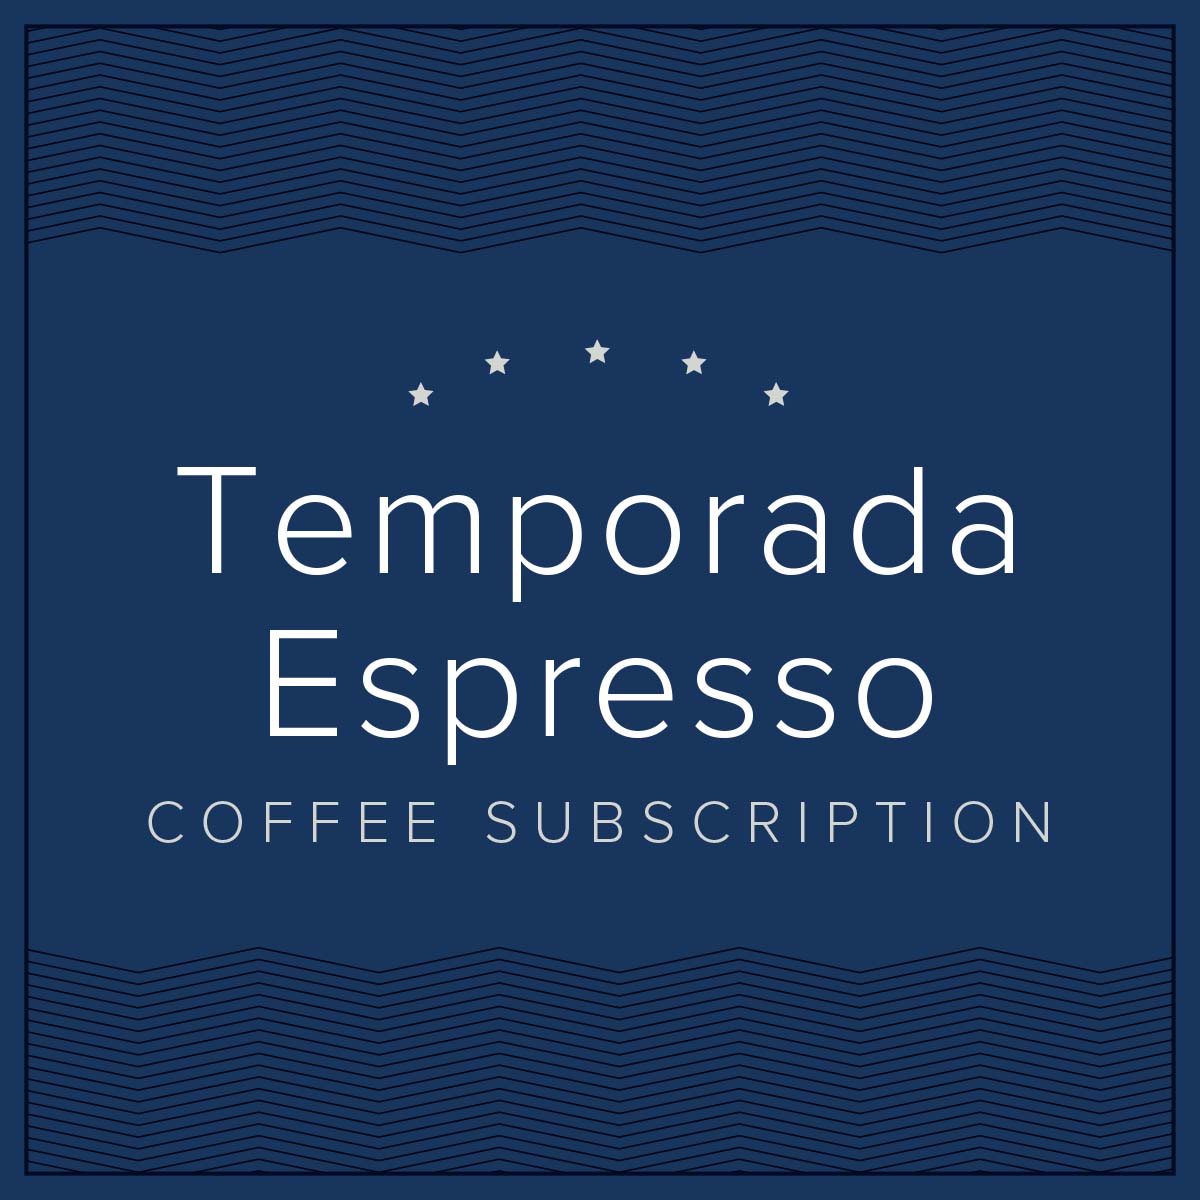 Conhece Ipanema - Ipanema Espresso